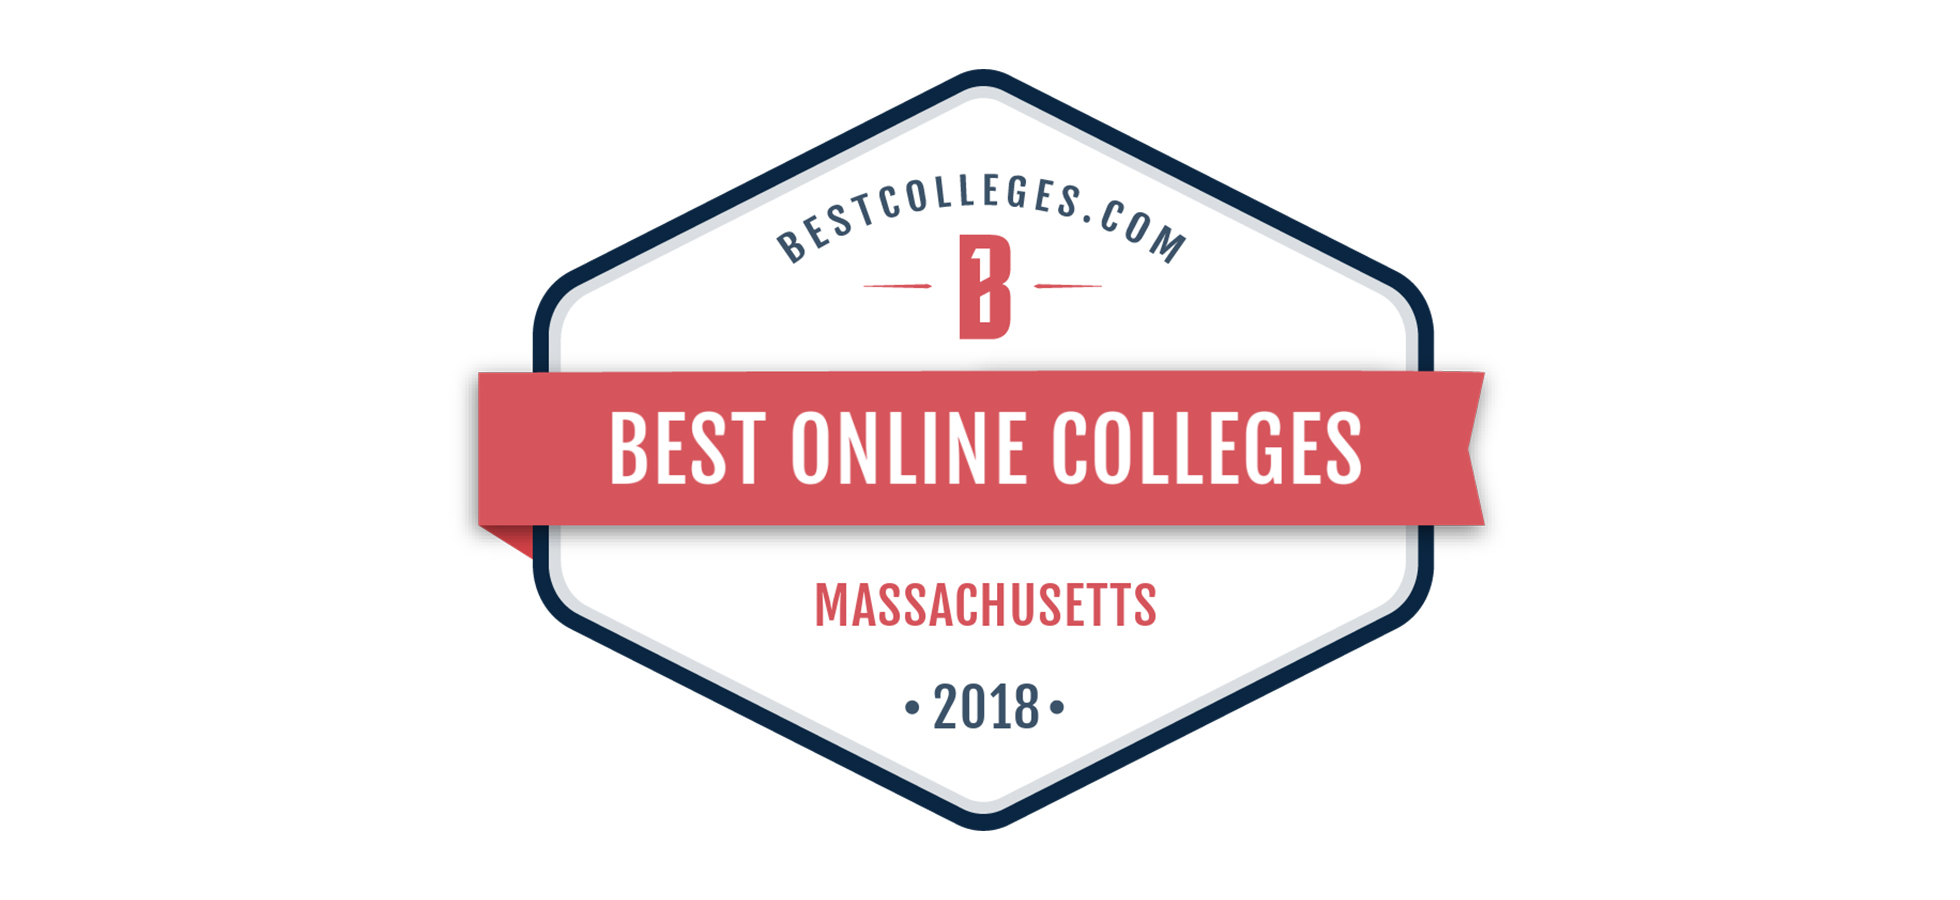 Assumption Ranked in Top 25 Best Online Colleges in Massachusetts